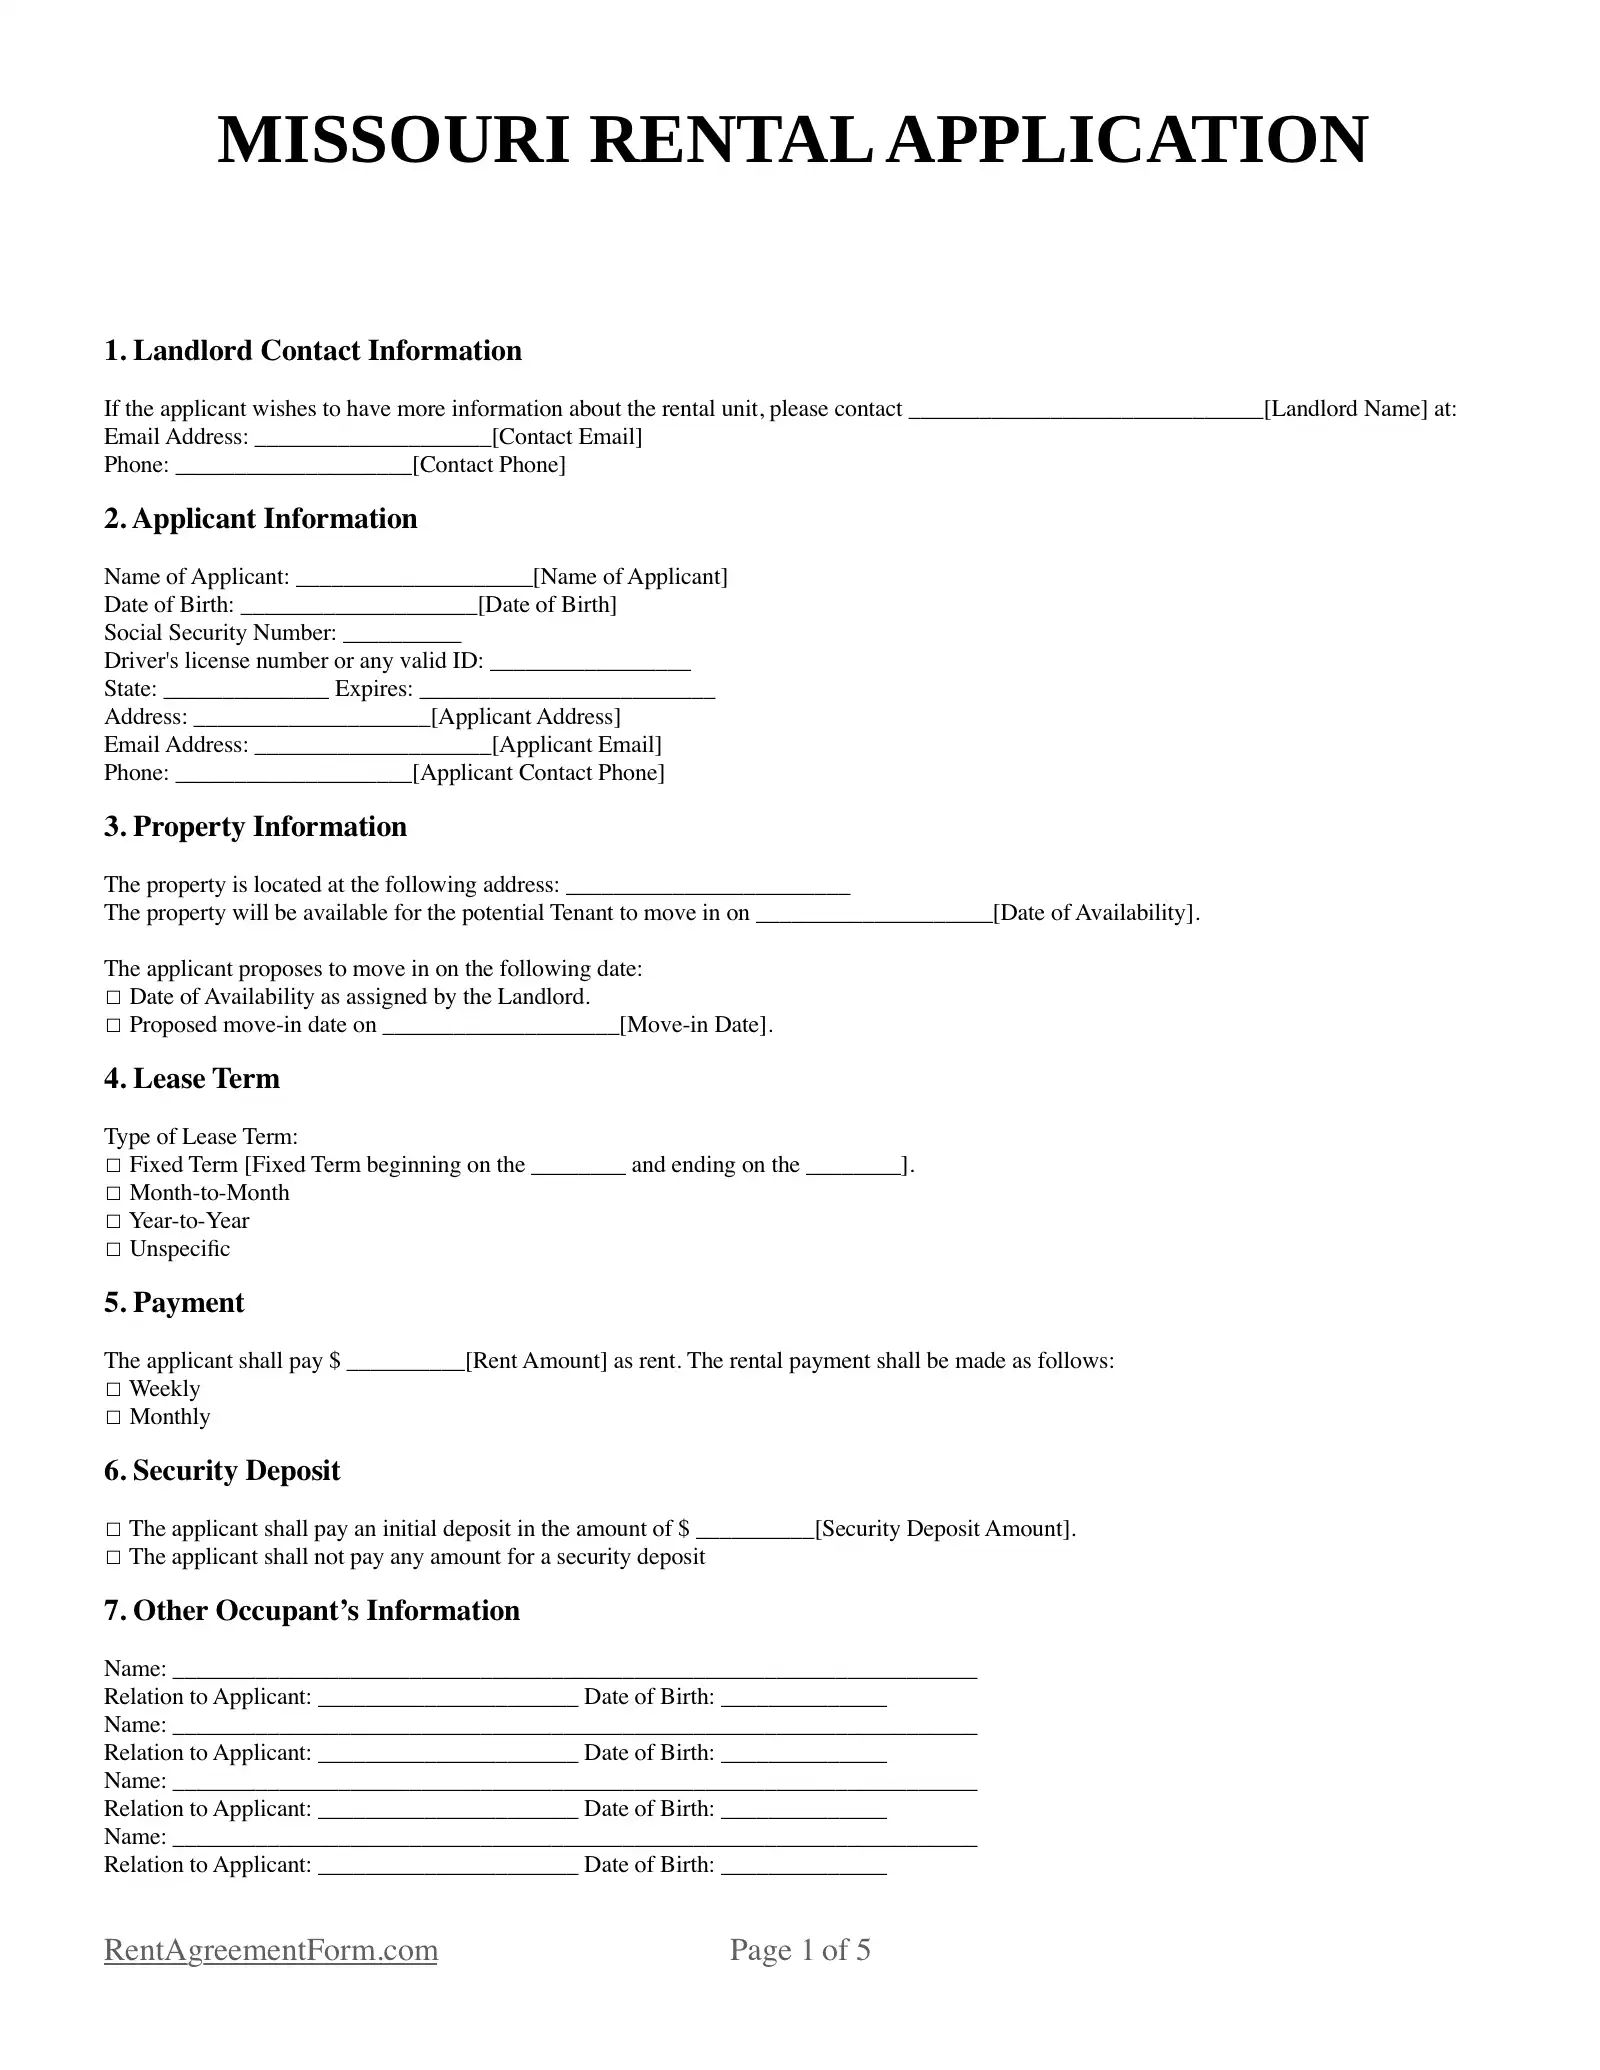 Missouri Rental Application Sample